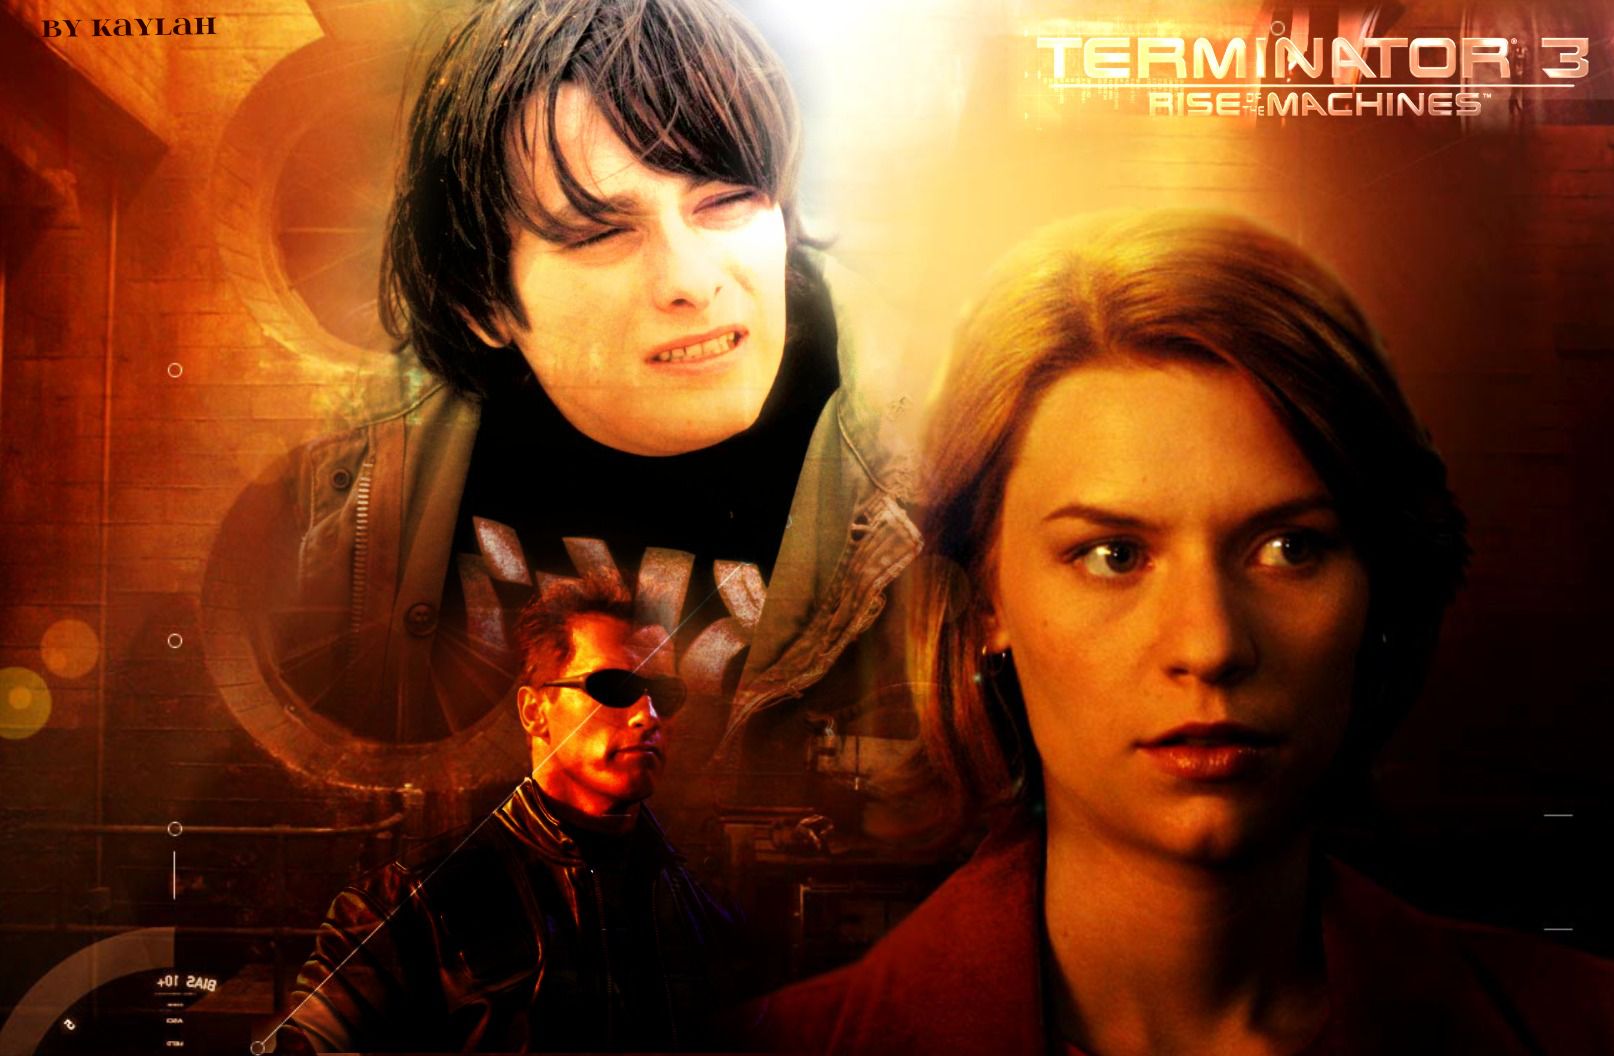 Terminator - Art by Kaylah
Keywords: terminator_art;terminator_wpr